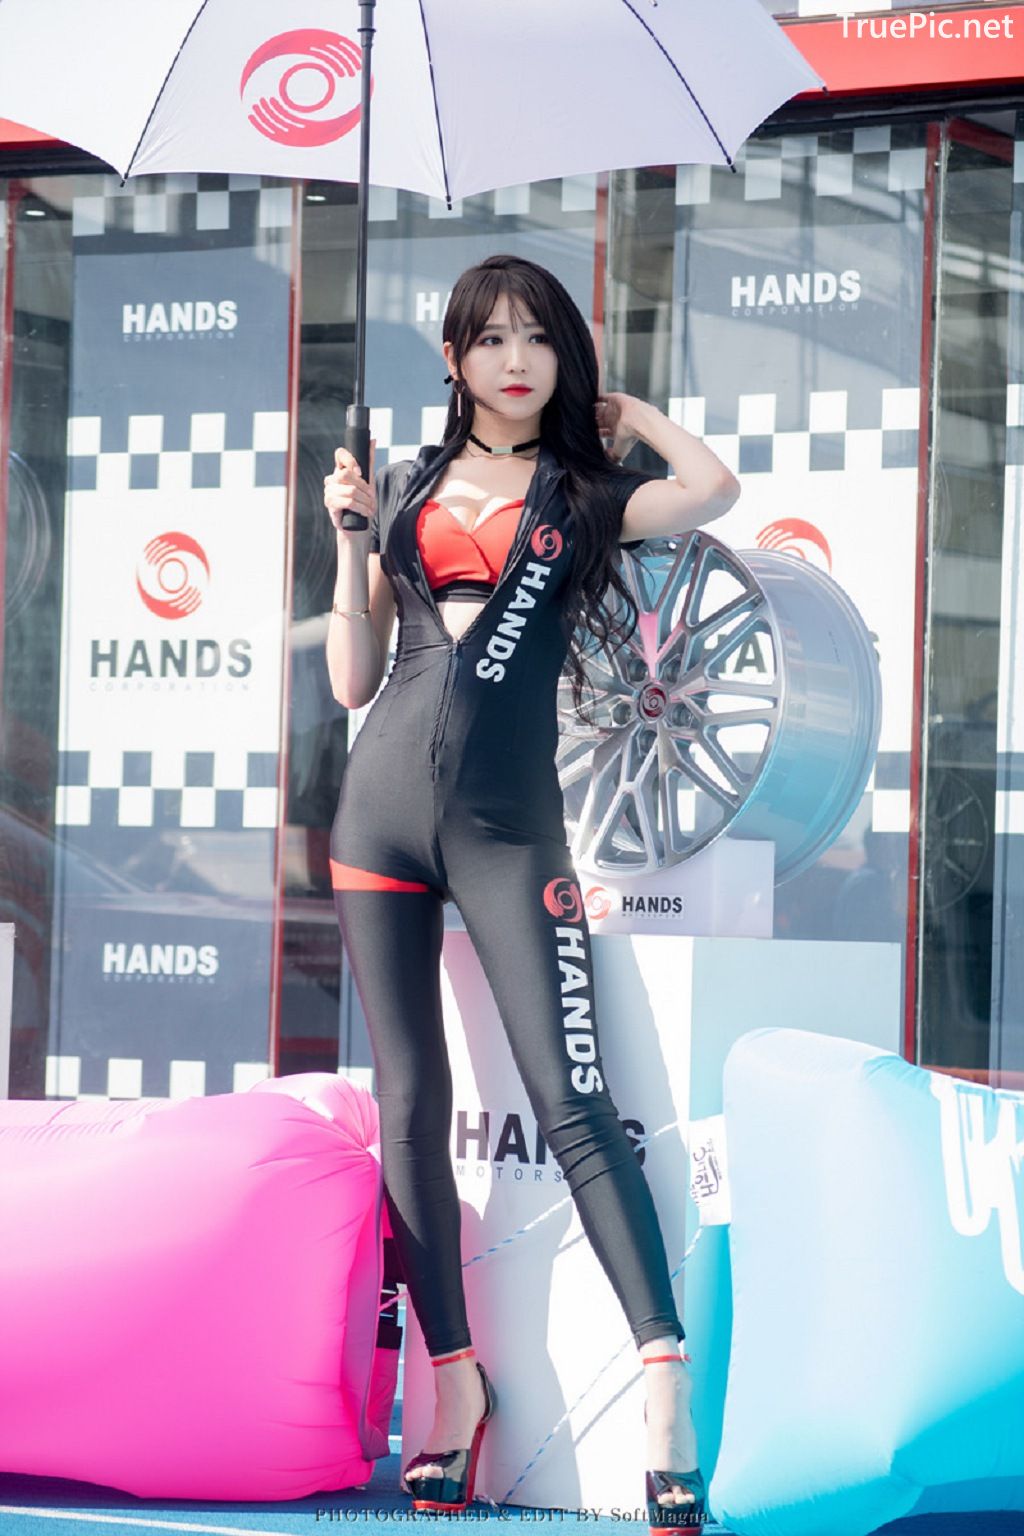 Image-Korean-Racing-Model-Lee-Eun-Hye-At-Incheon-Korea-Tuning-Festival-TruePic.net- Picture-63